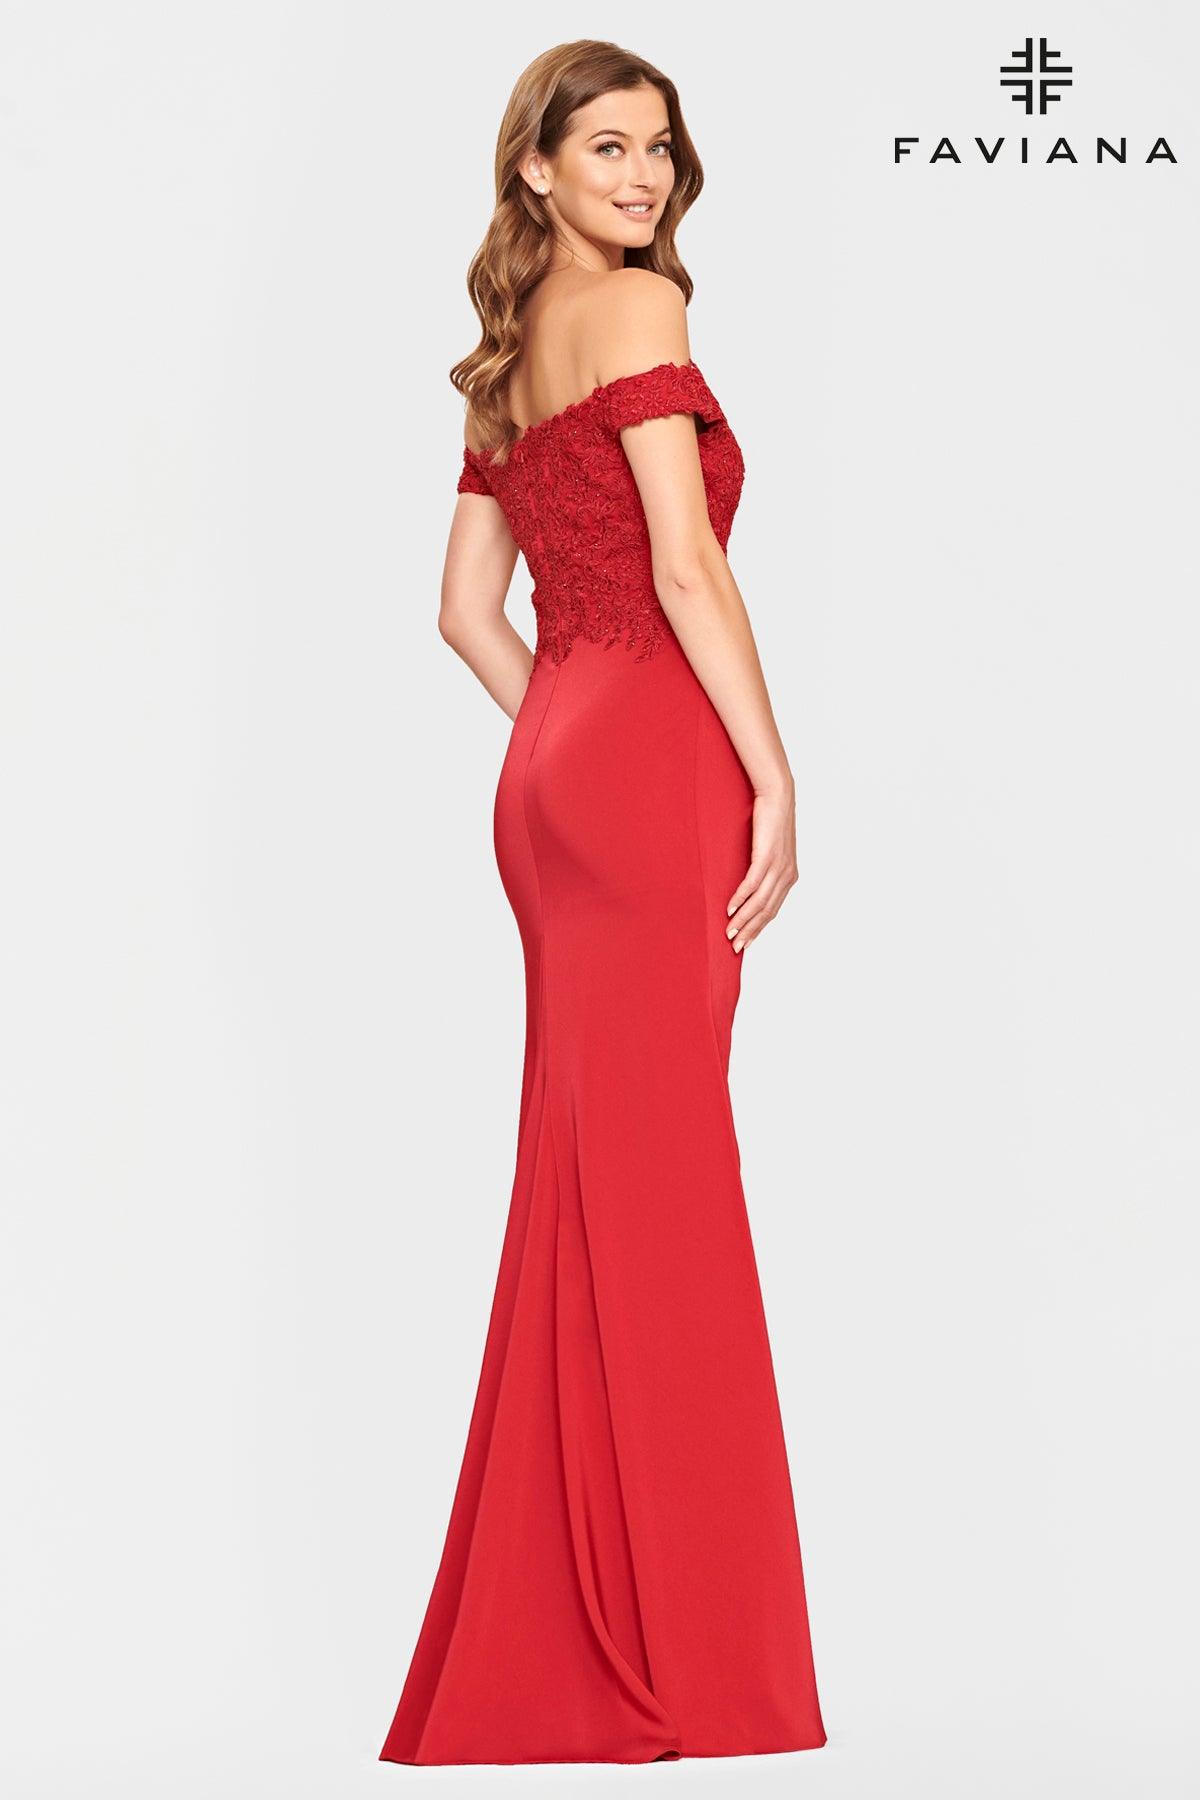 Faviana S10863 Long Off Shoulder Formal Prom Dress The Dress Outlet 